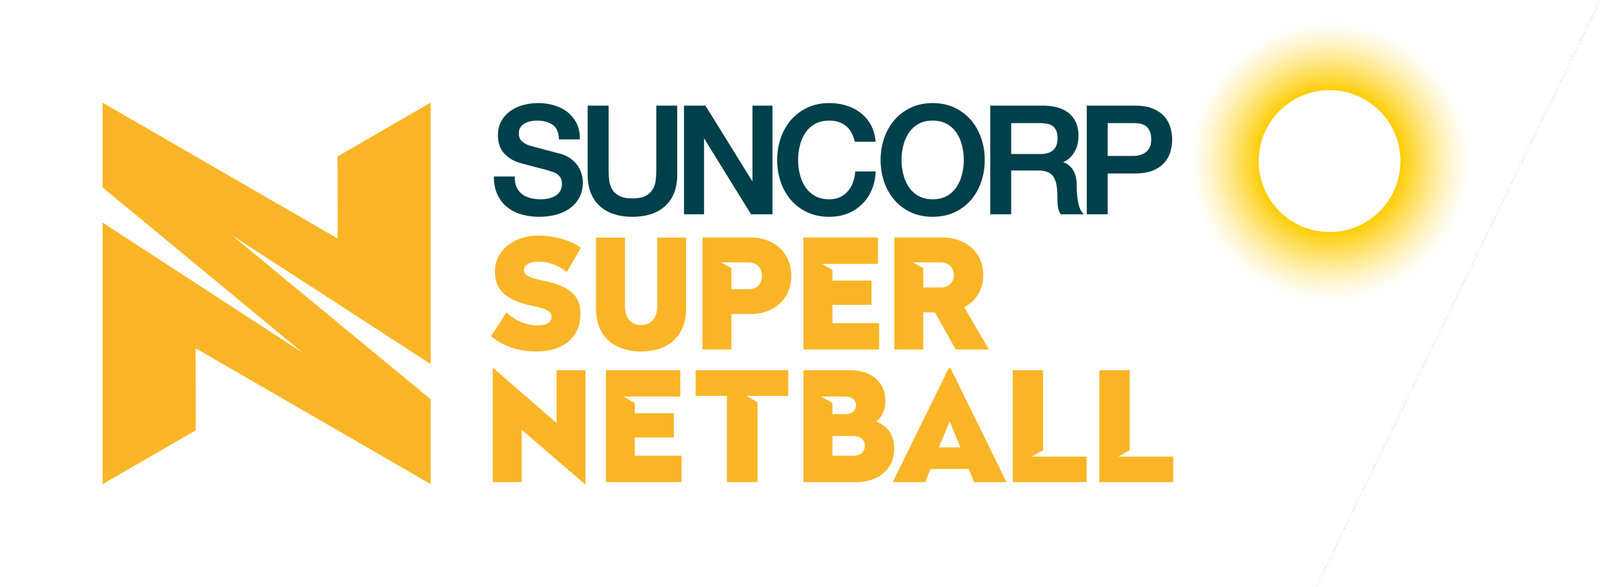 Suncorp Super Netball.png